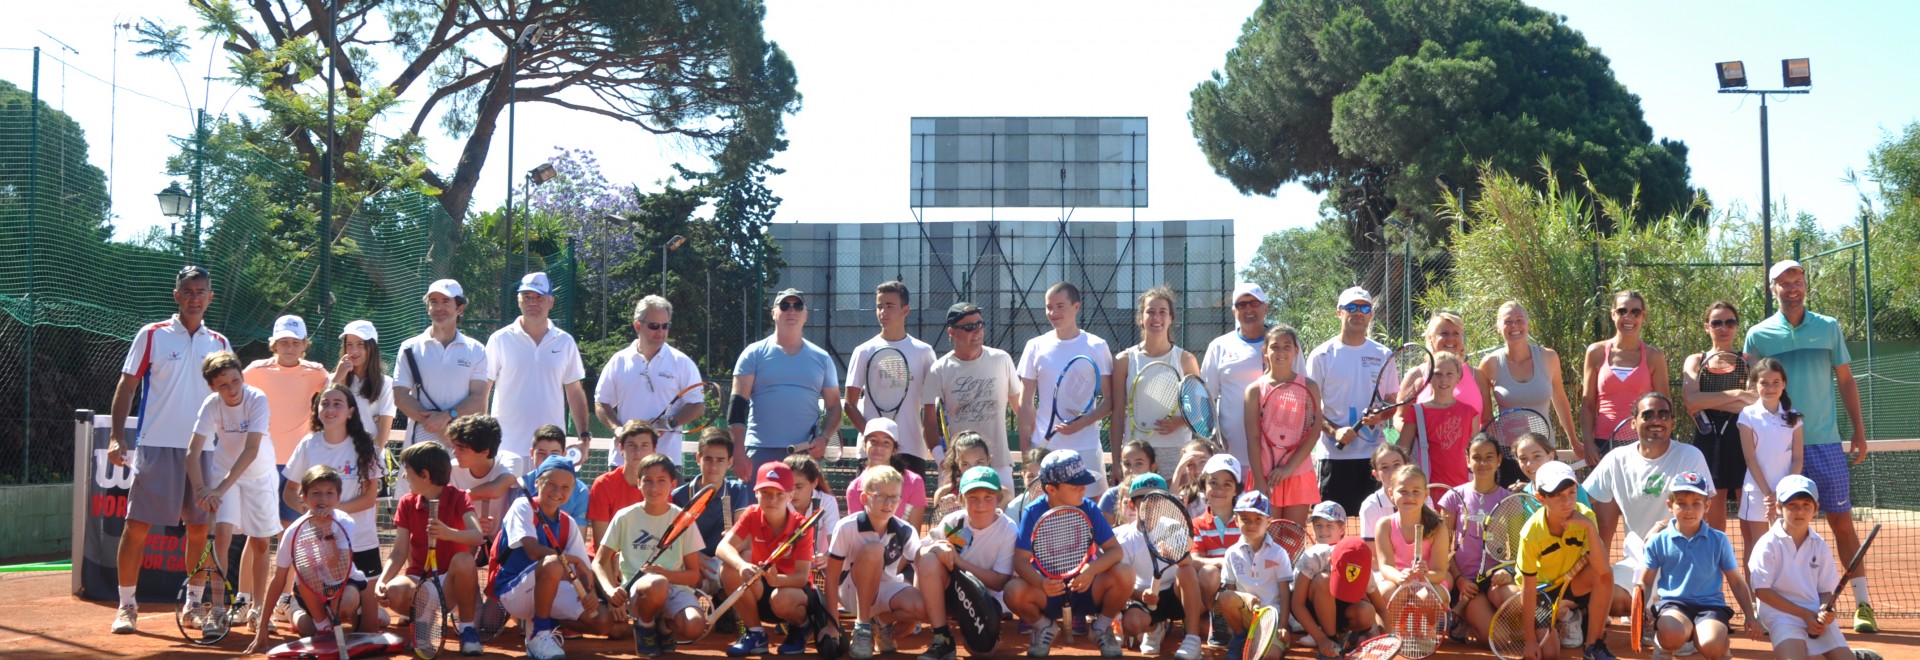 Private Lesson Package at Royal Club Marbella - Royal Tennis Club Marbella